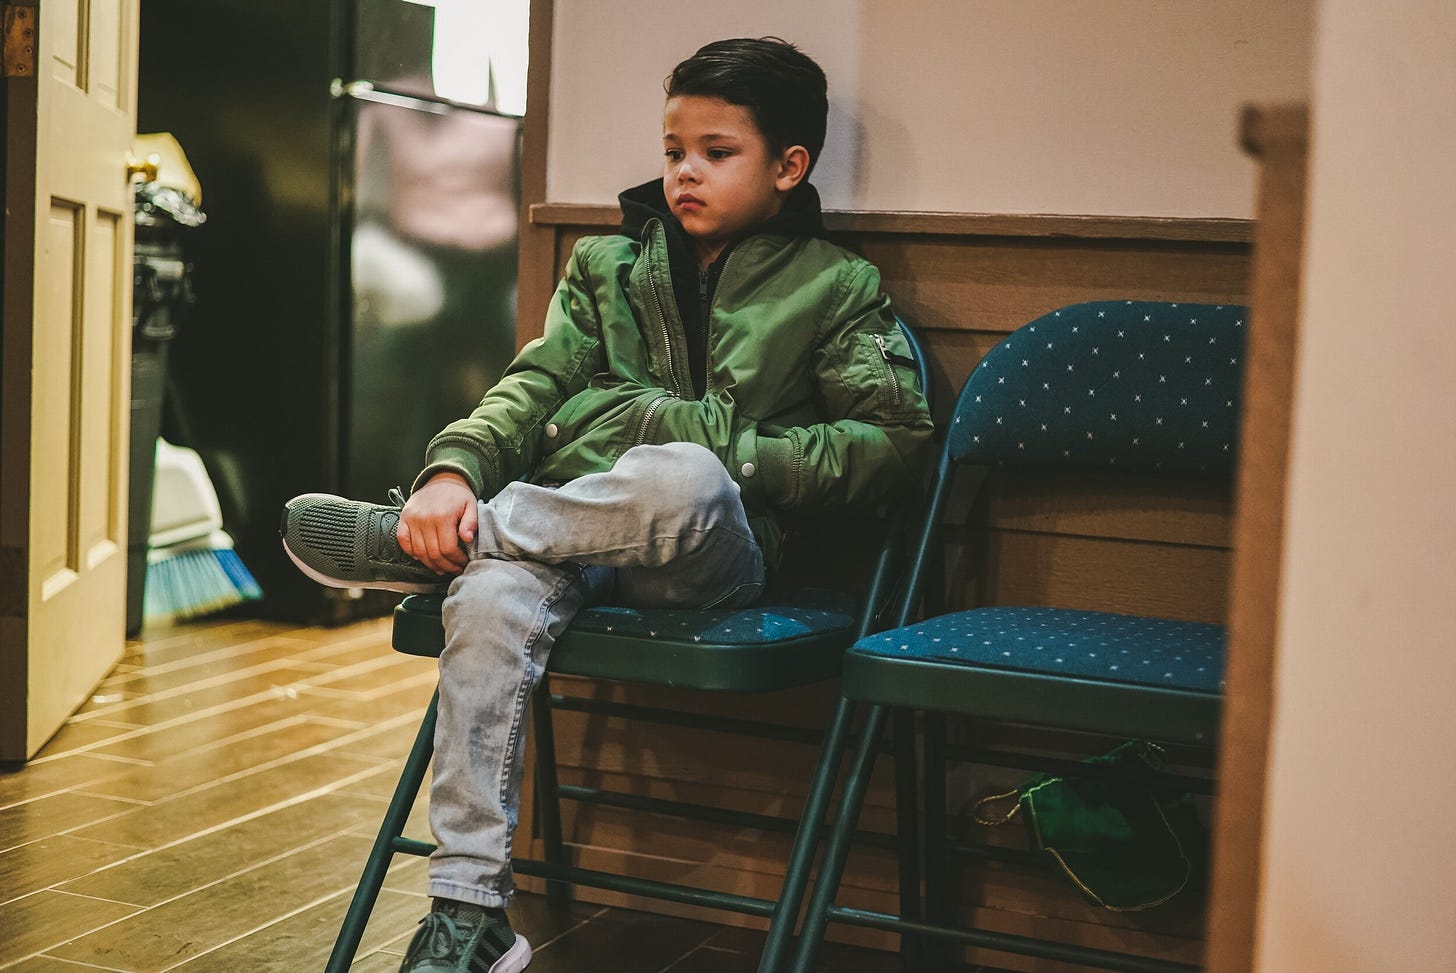 How Do I Teach My Child To Wait? — The Behavior Place